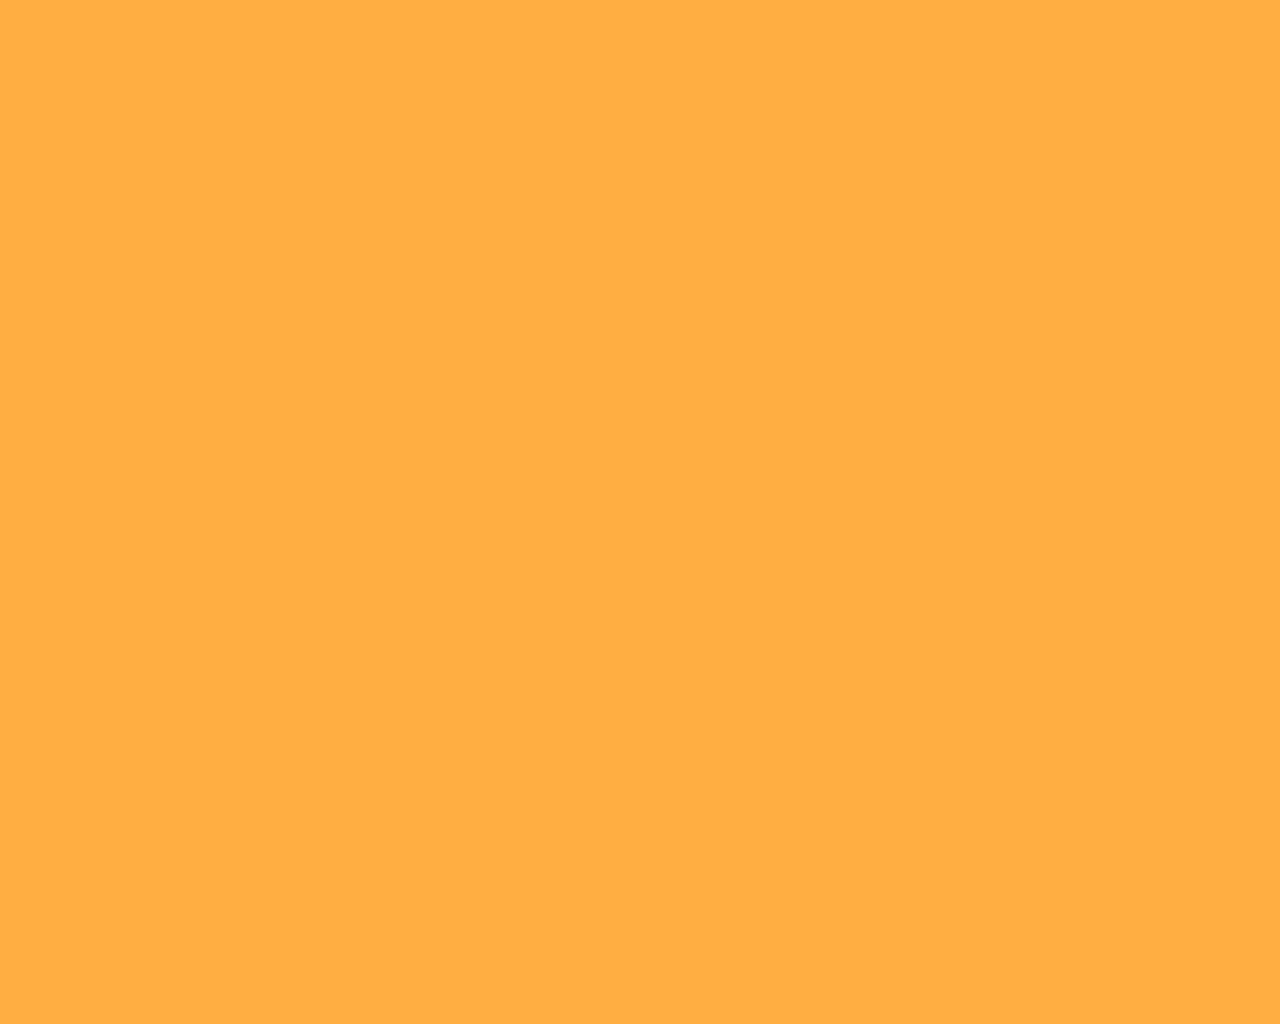 Solid Yellow Orange Color